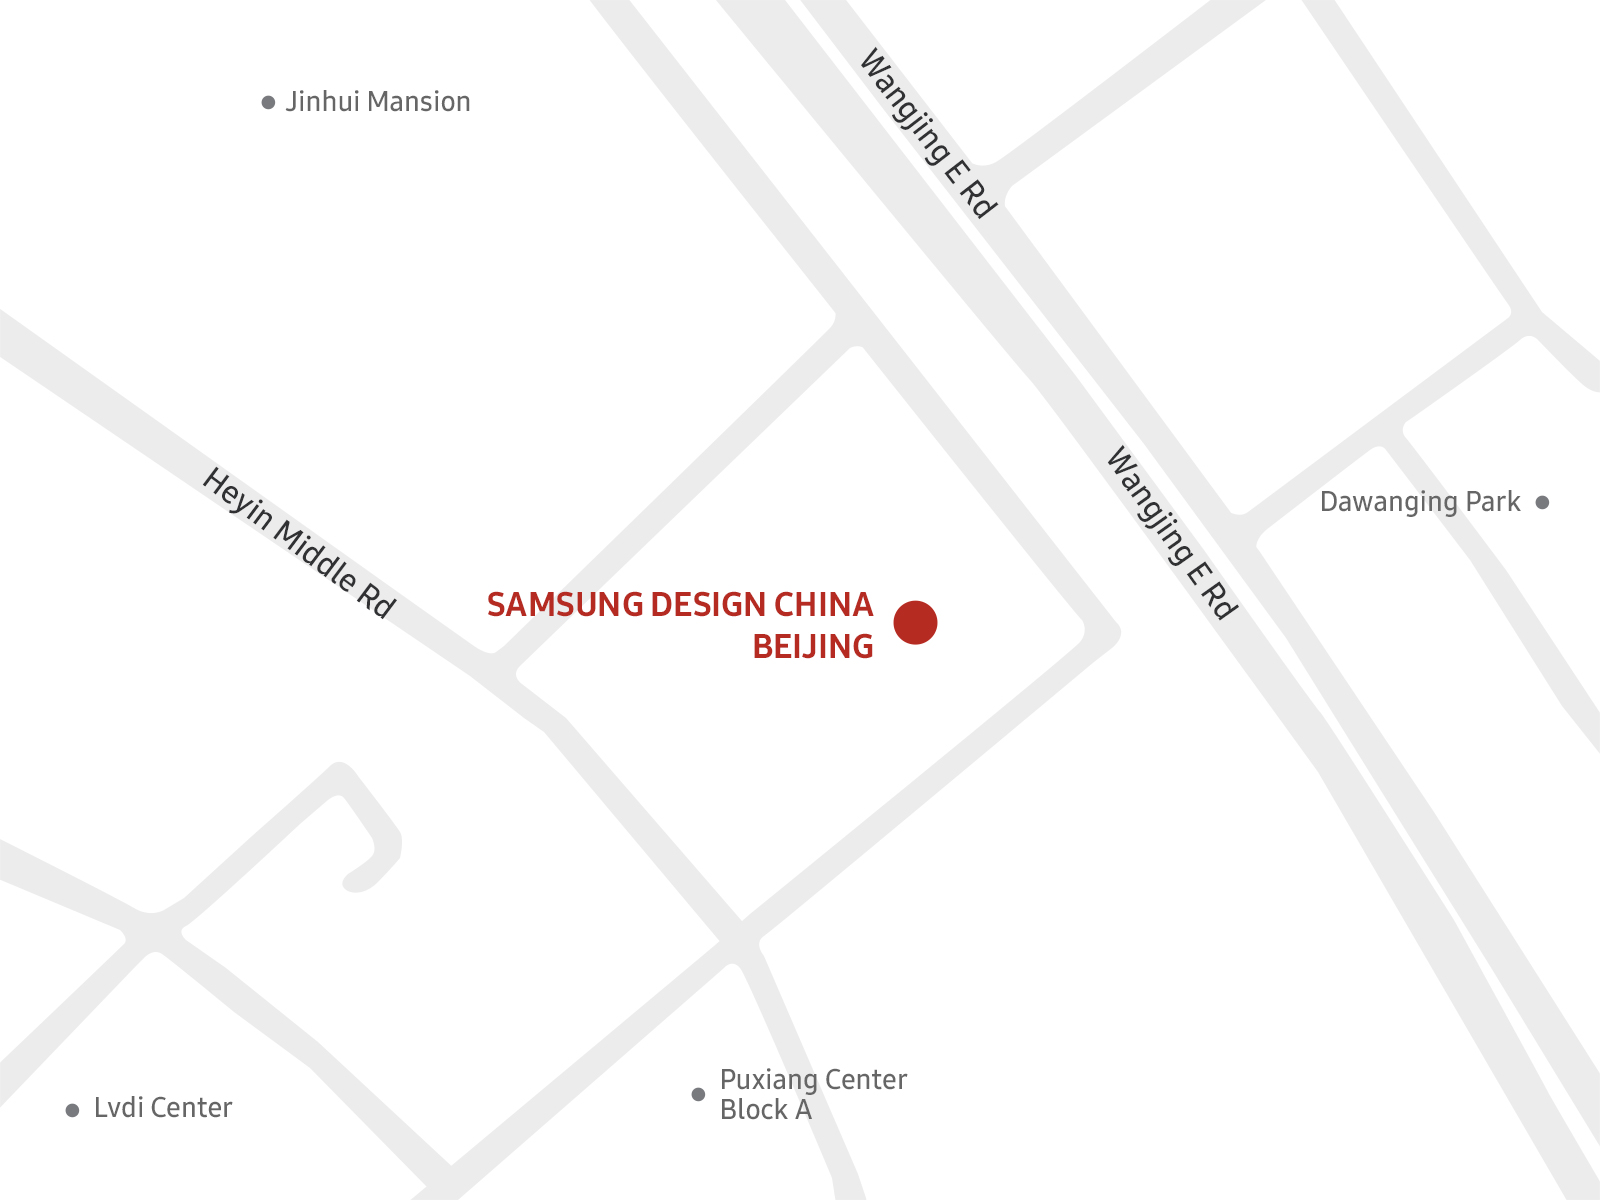 SAMSUNG DESIGN CHINA, BEIJING